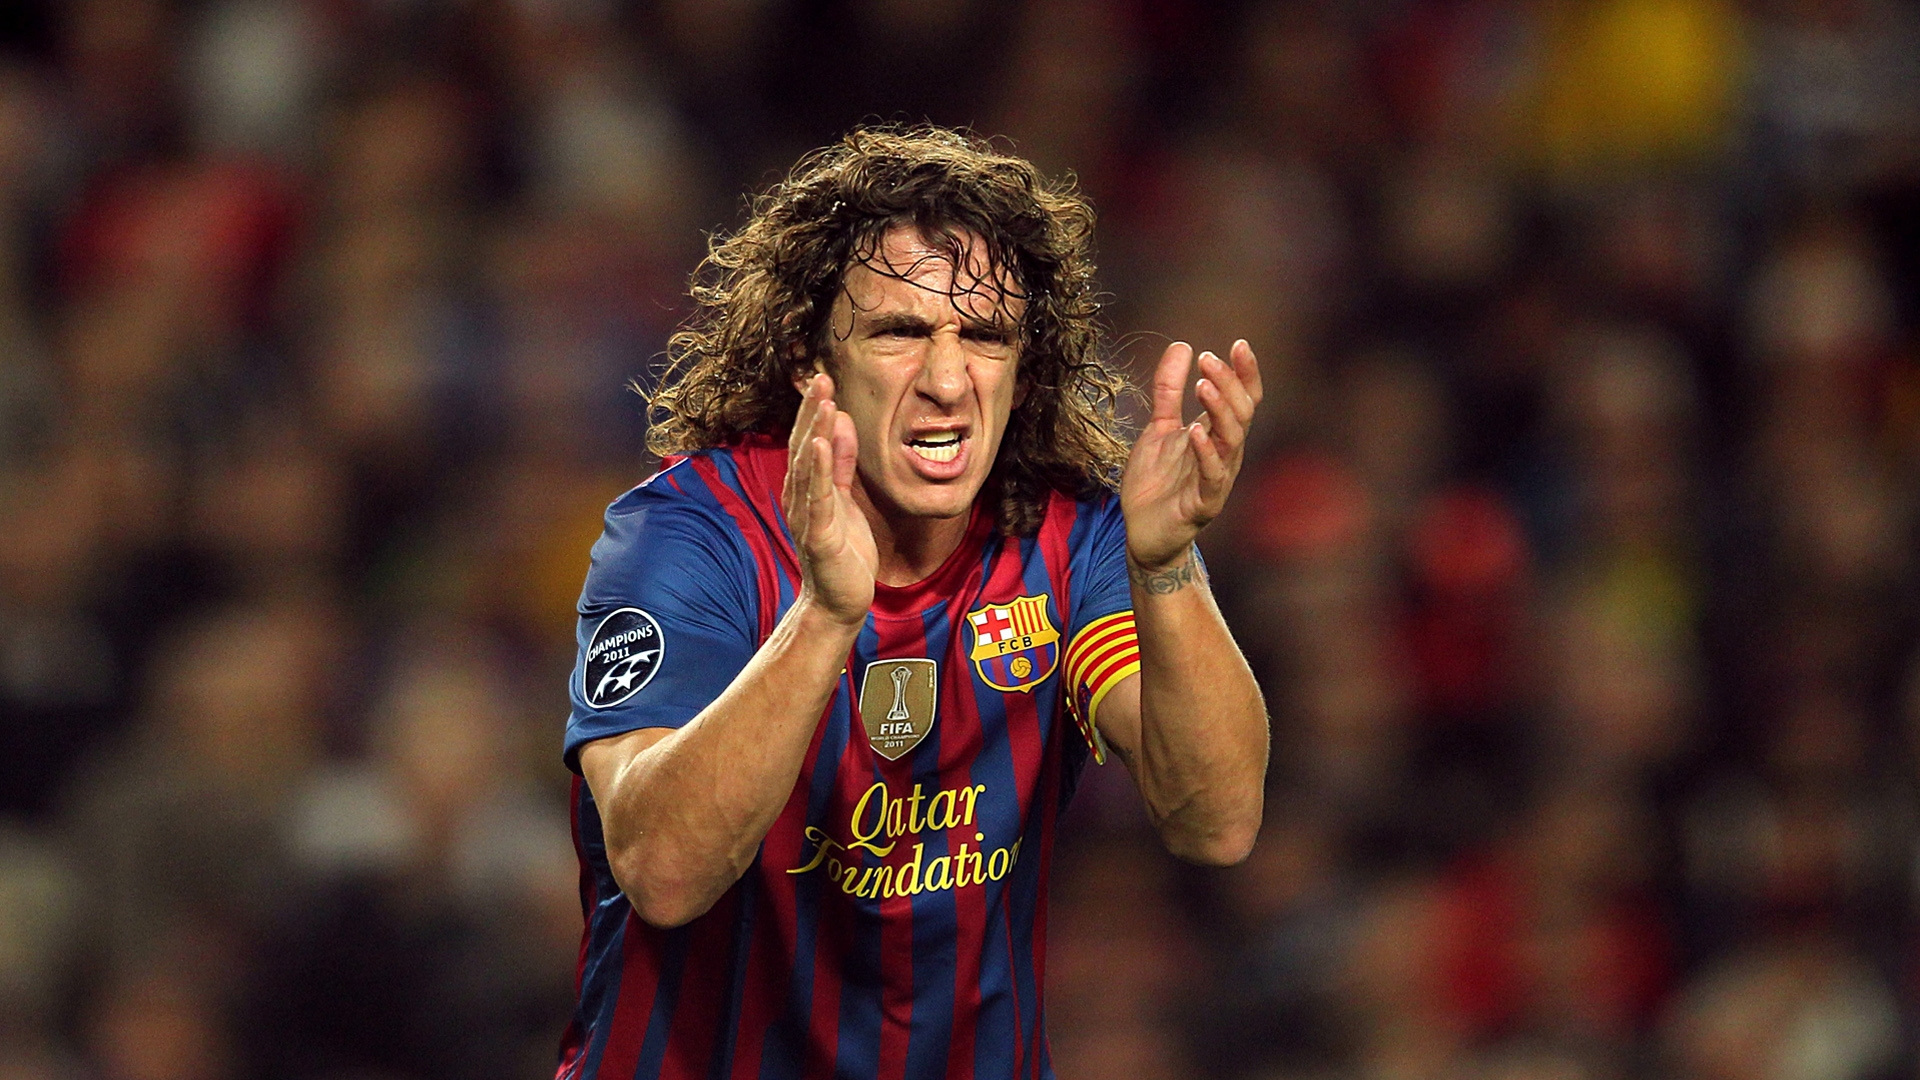 the_player_of_barcelona_carles_puyol_applauding.jpg